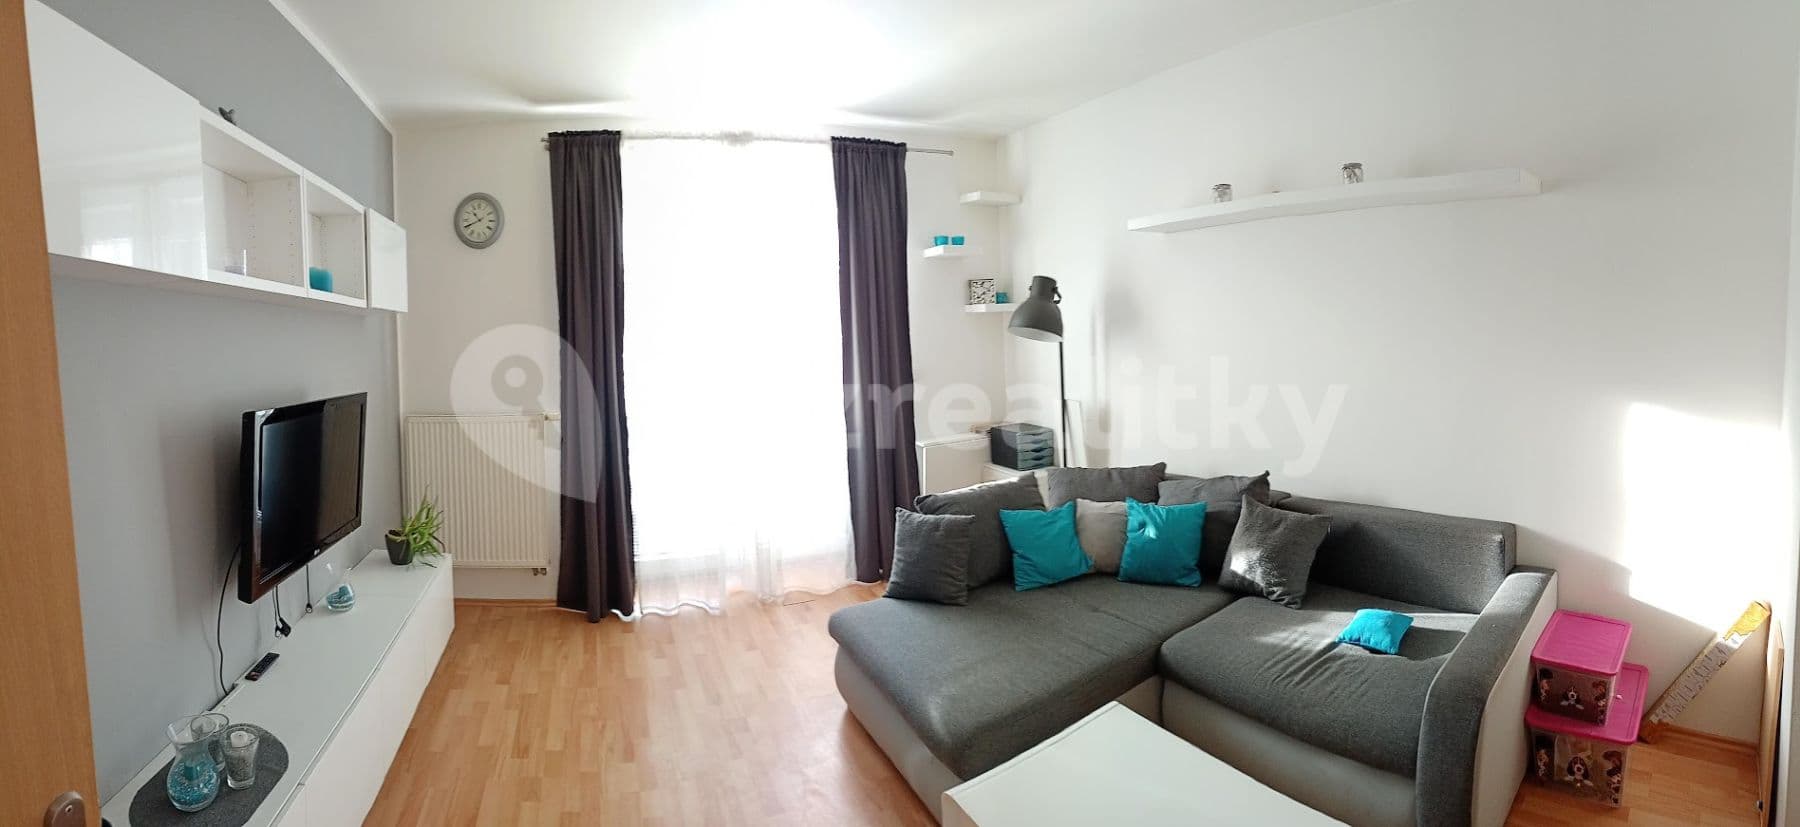 2 bedroom flat for sale, 50 m², Ježovská, Prague, Prague